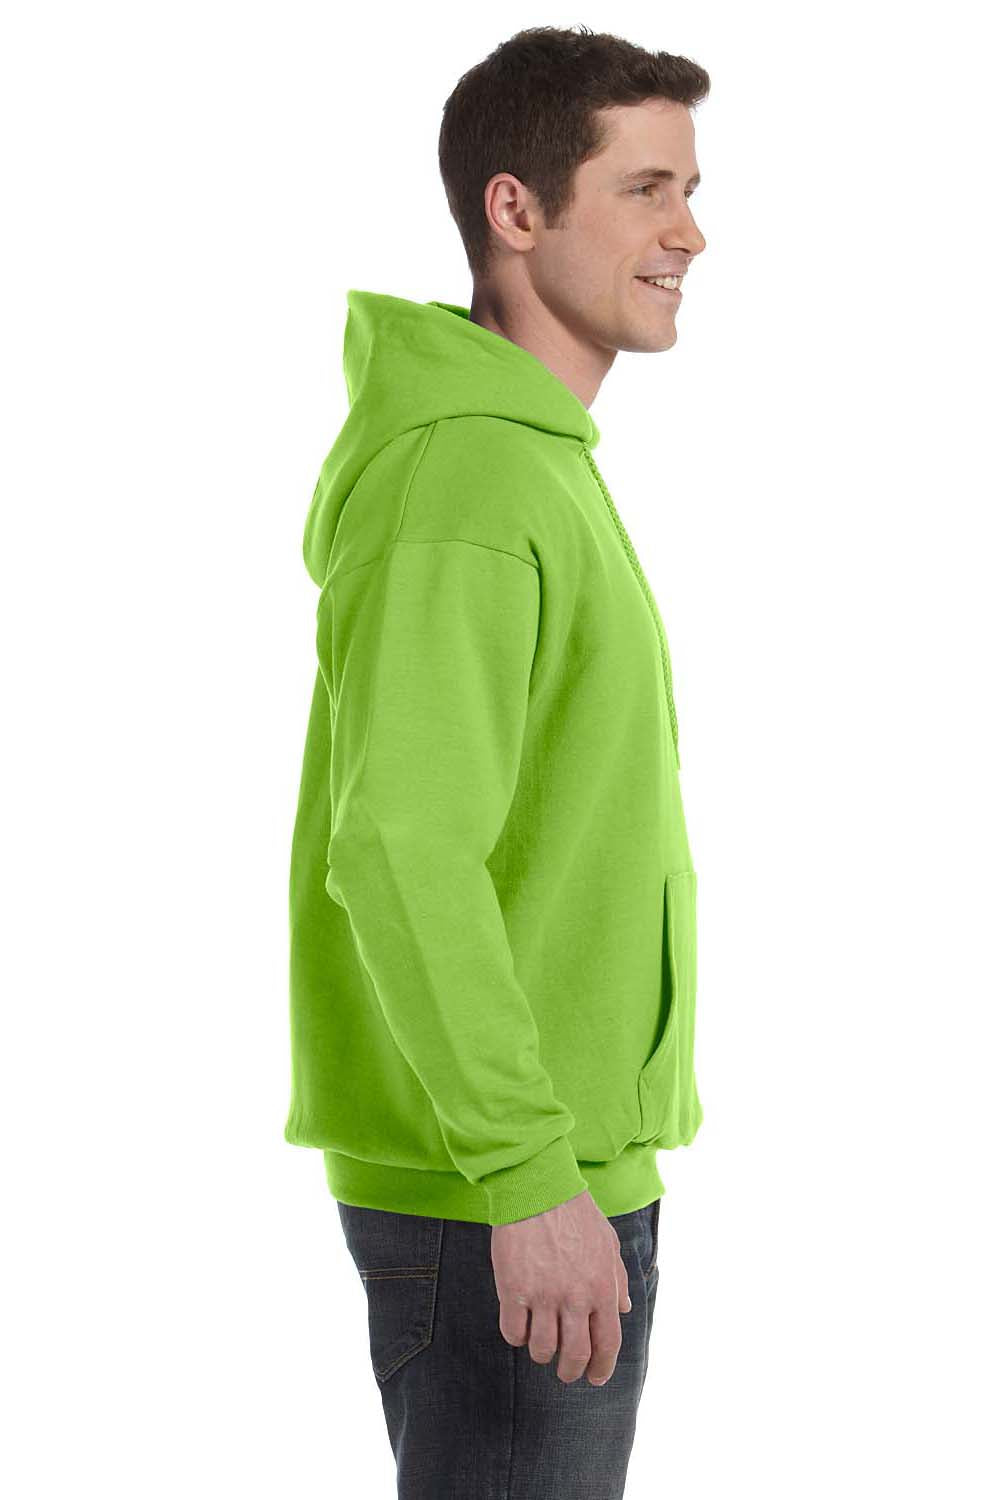 Hanes P170 Mens EcoSmart Print Pro XP Hooded Sweatshirt Hoodie Lime Green Side